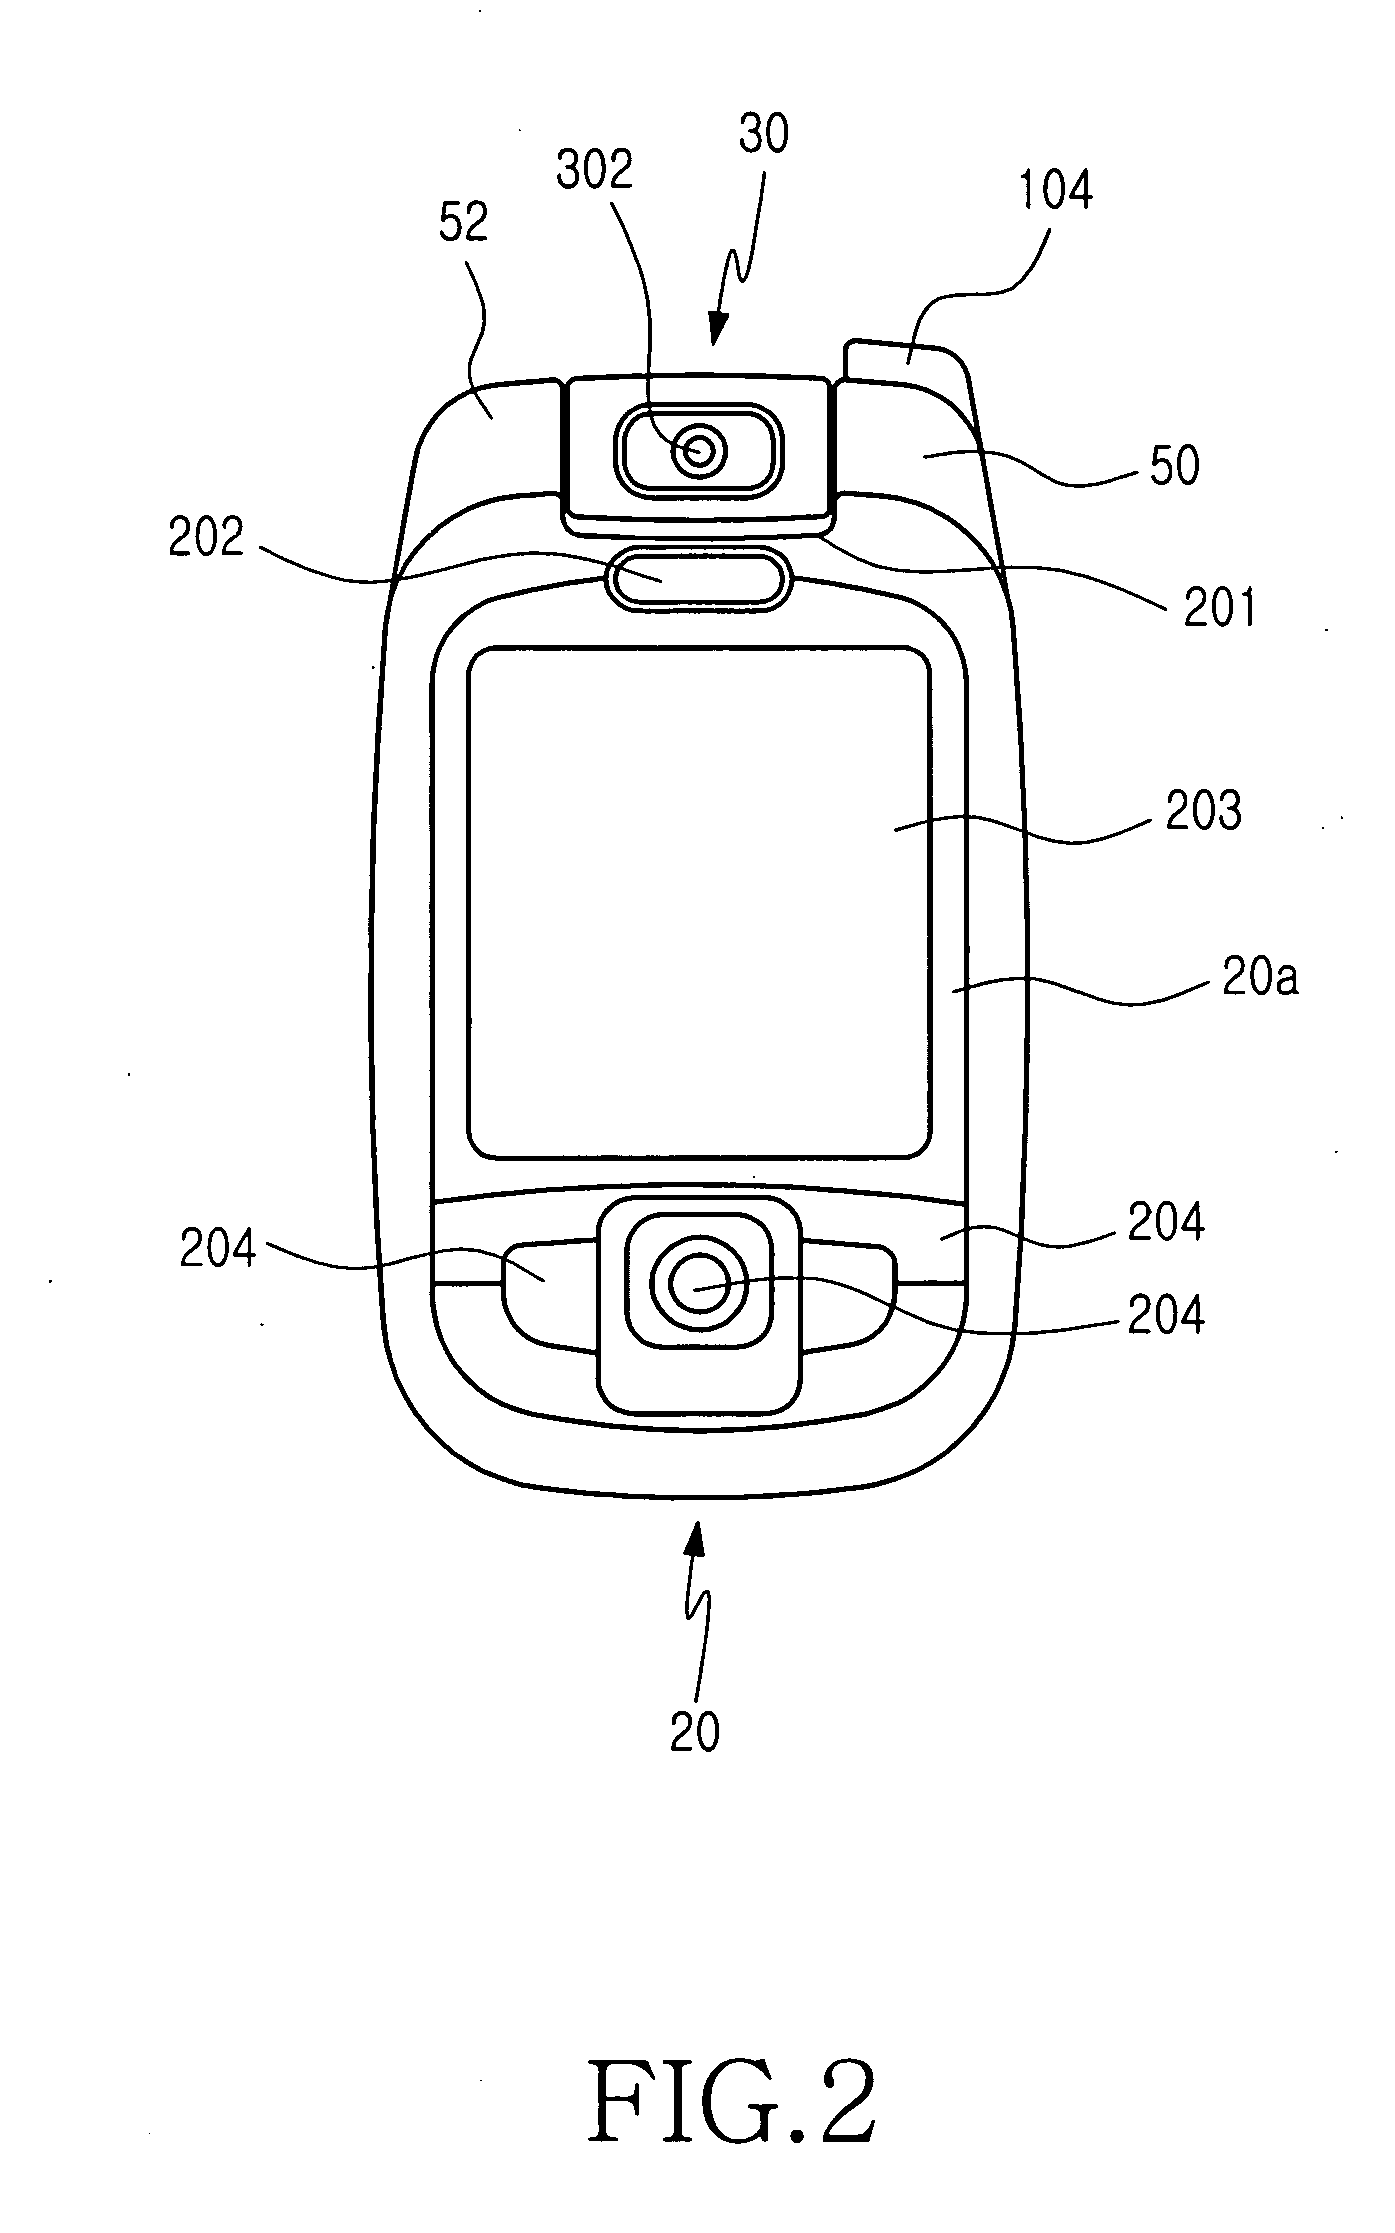 Sliding-type portable digital communication apparatus